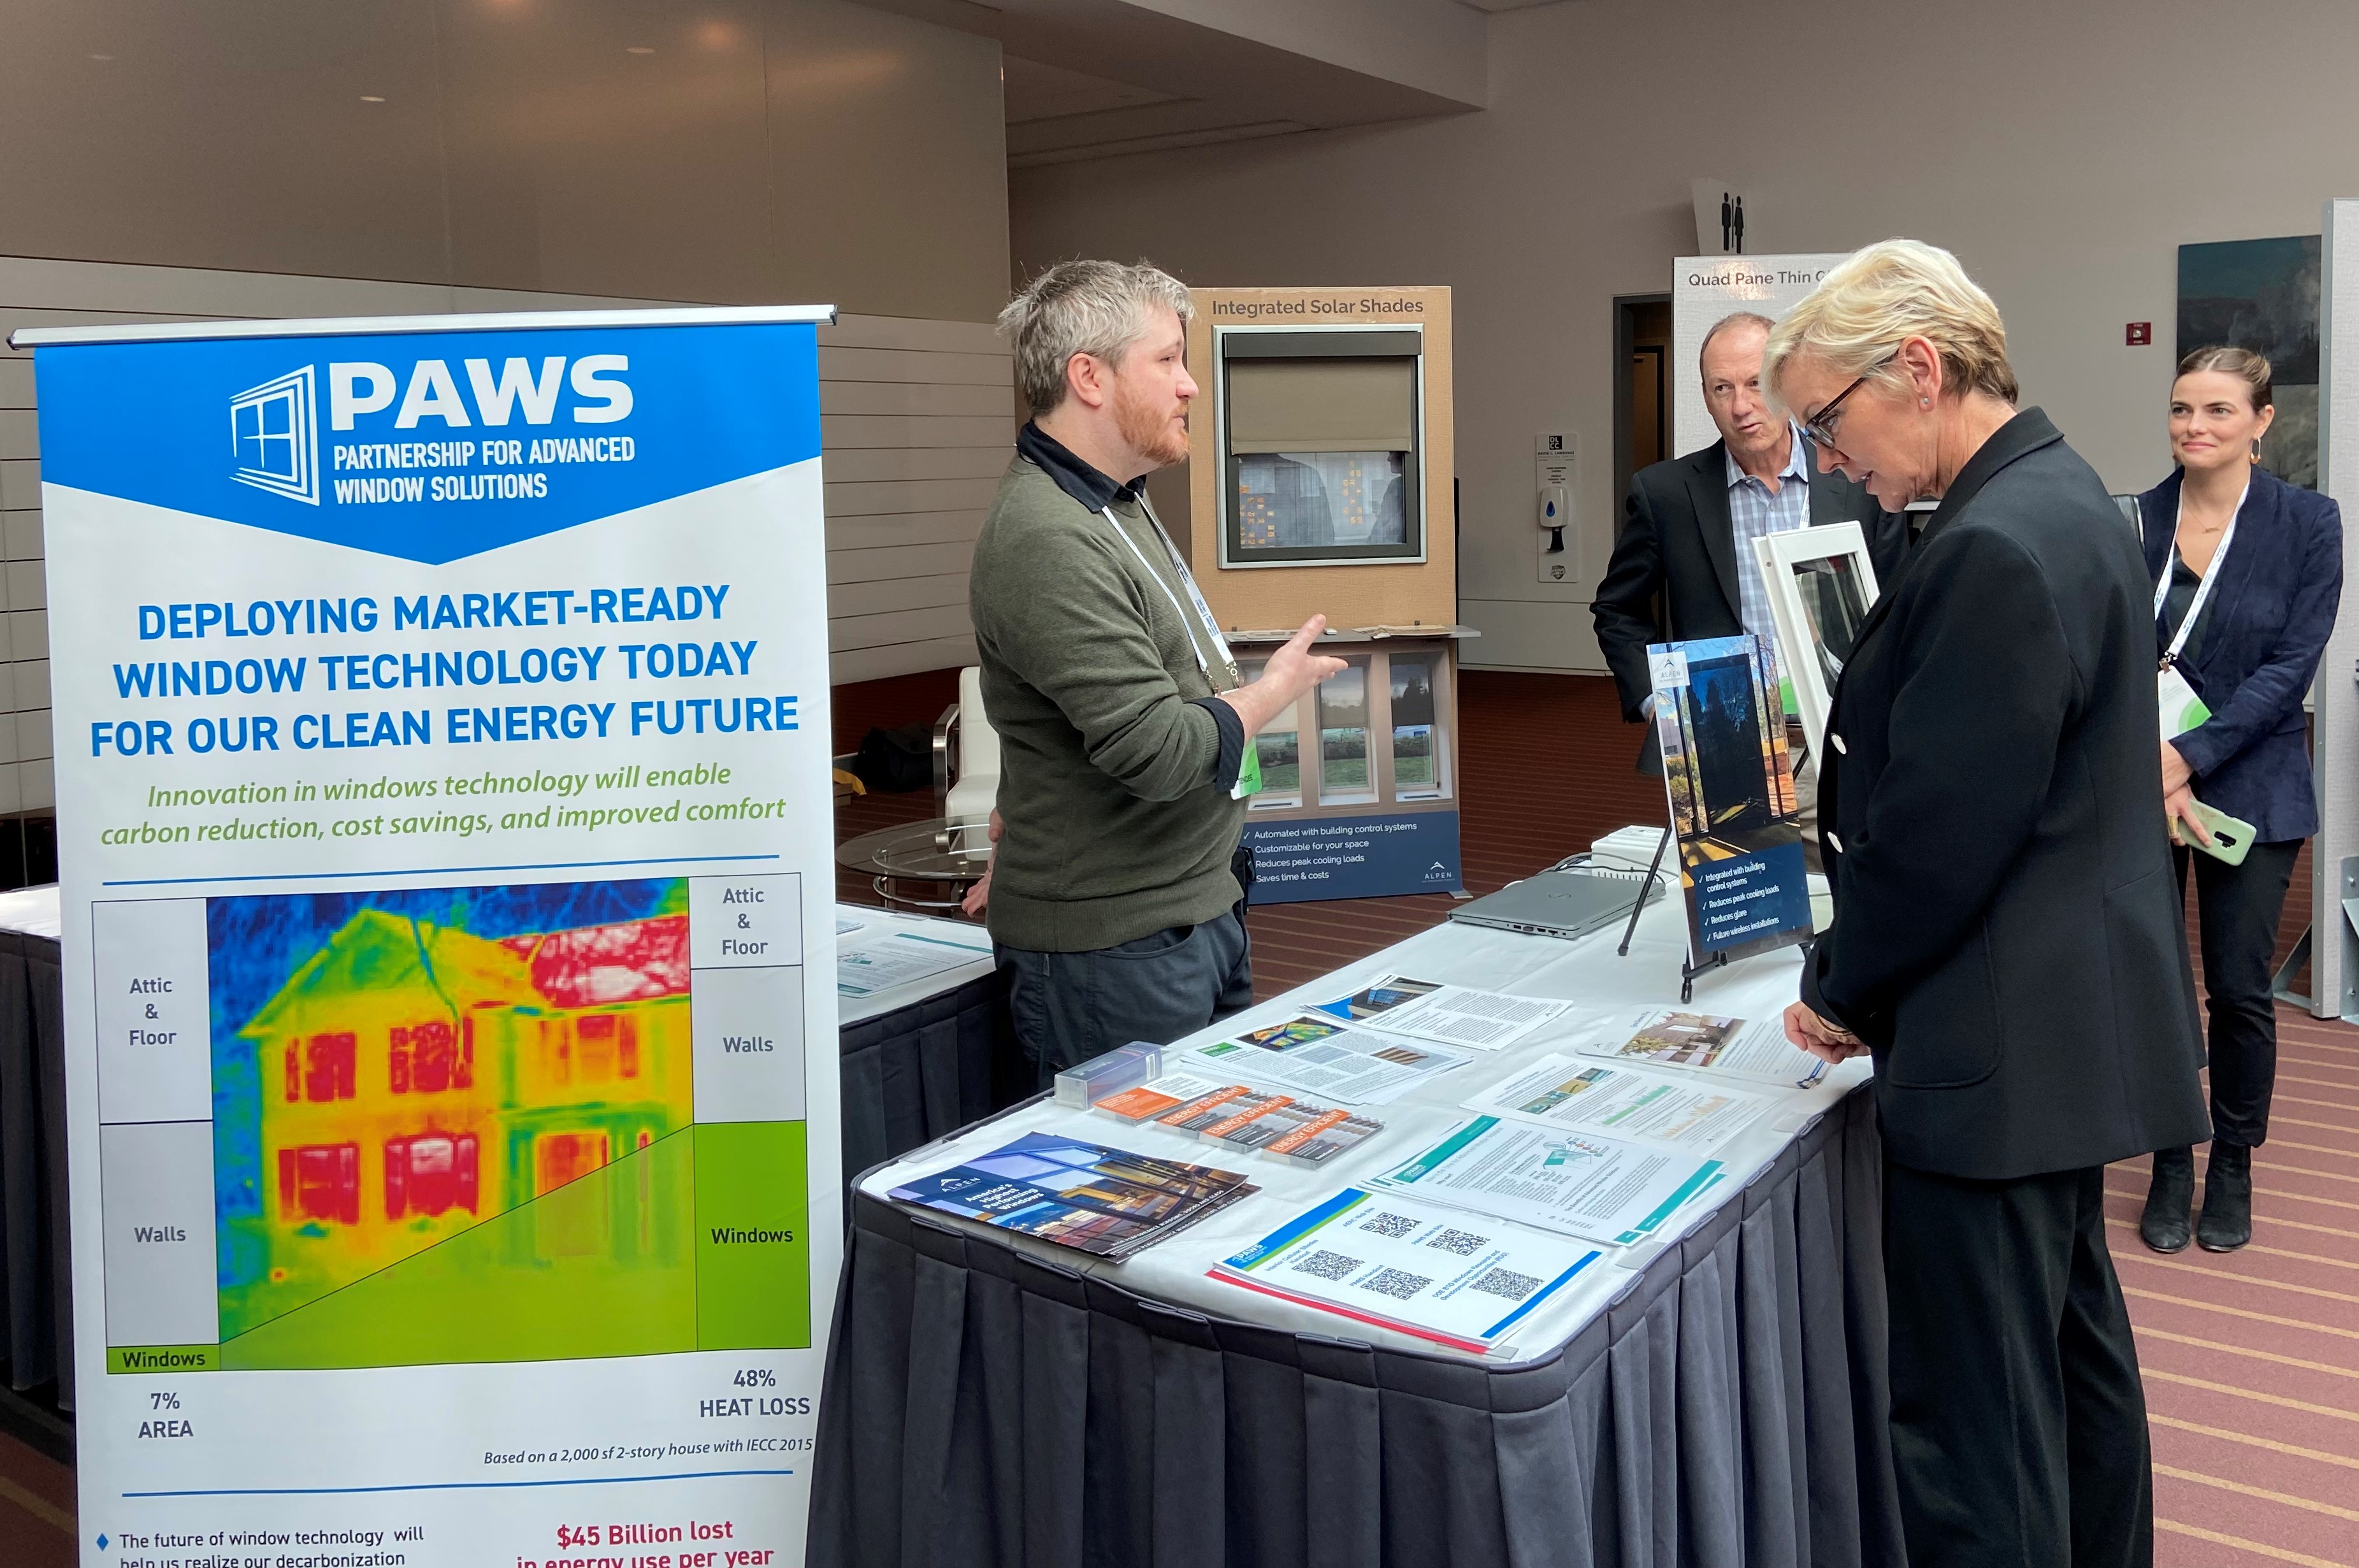 U.S. Secretary of Energy, Jennifer Granholm, Visits PAWS Booth During Global Clean Energy Forum in Pittsburgh